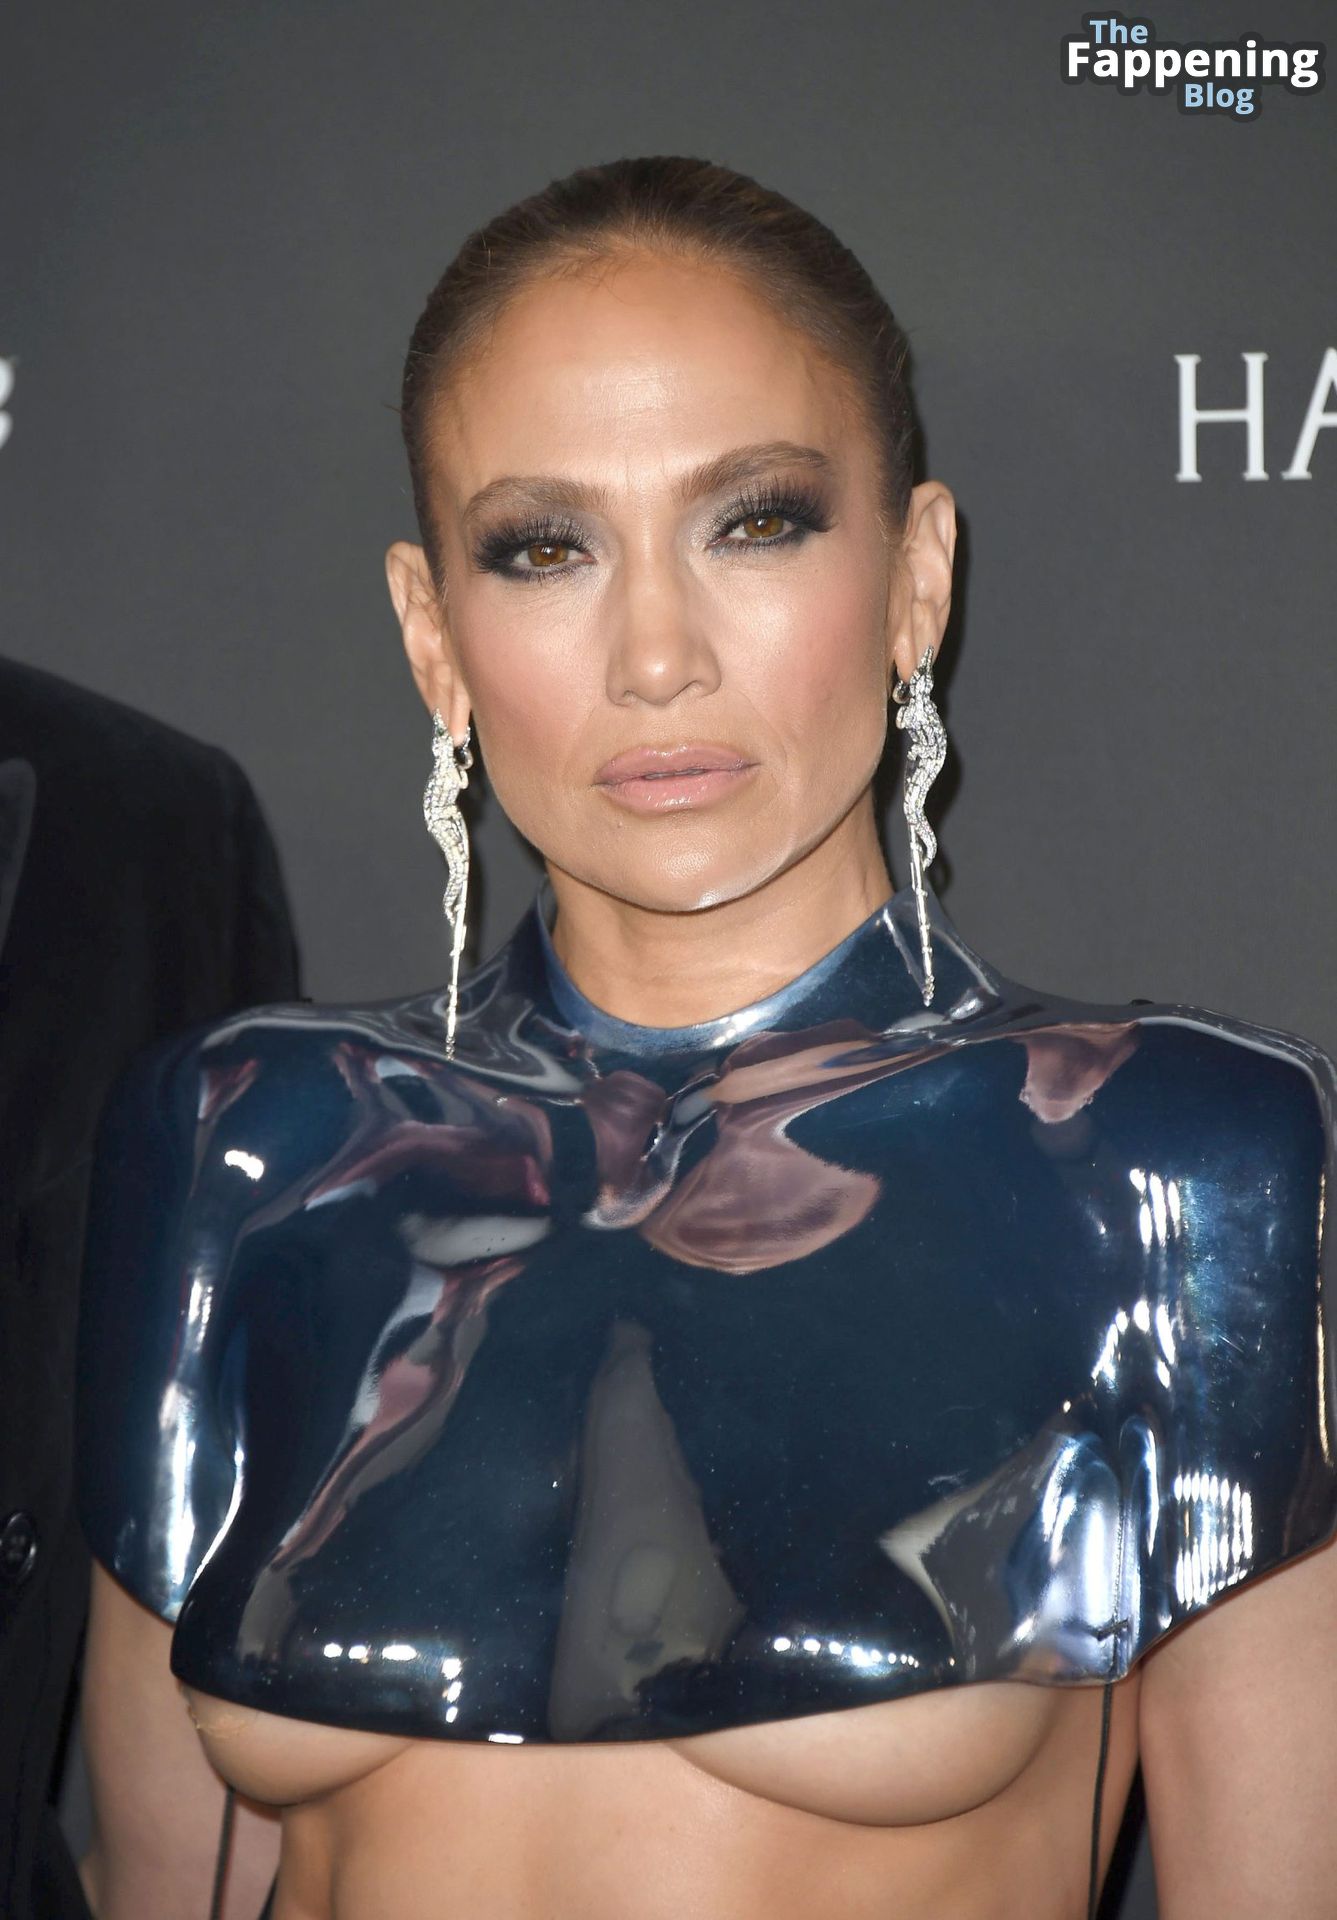 Jennifer-Lopez-Sexy-31-The-Fappening-Blog.jpg